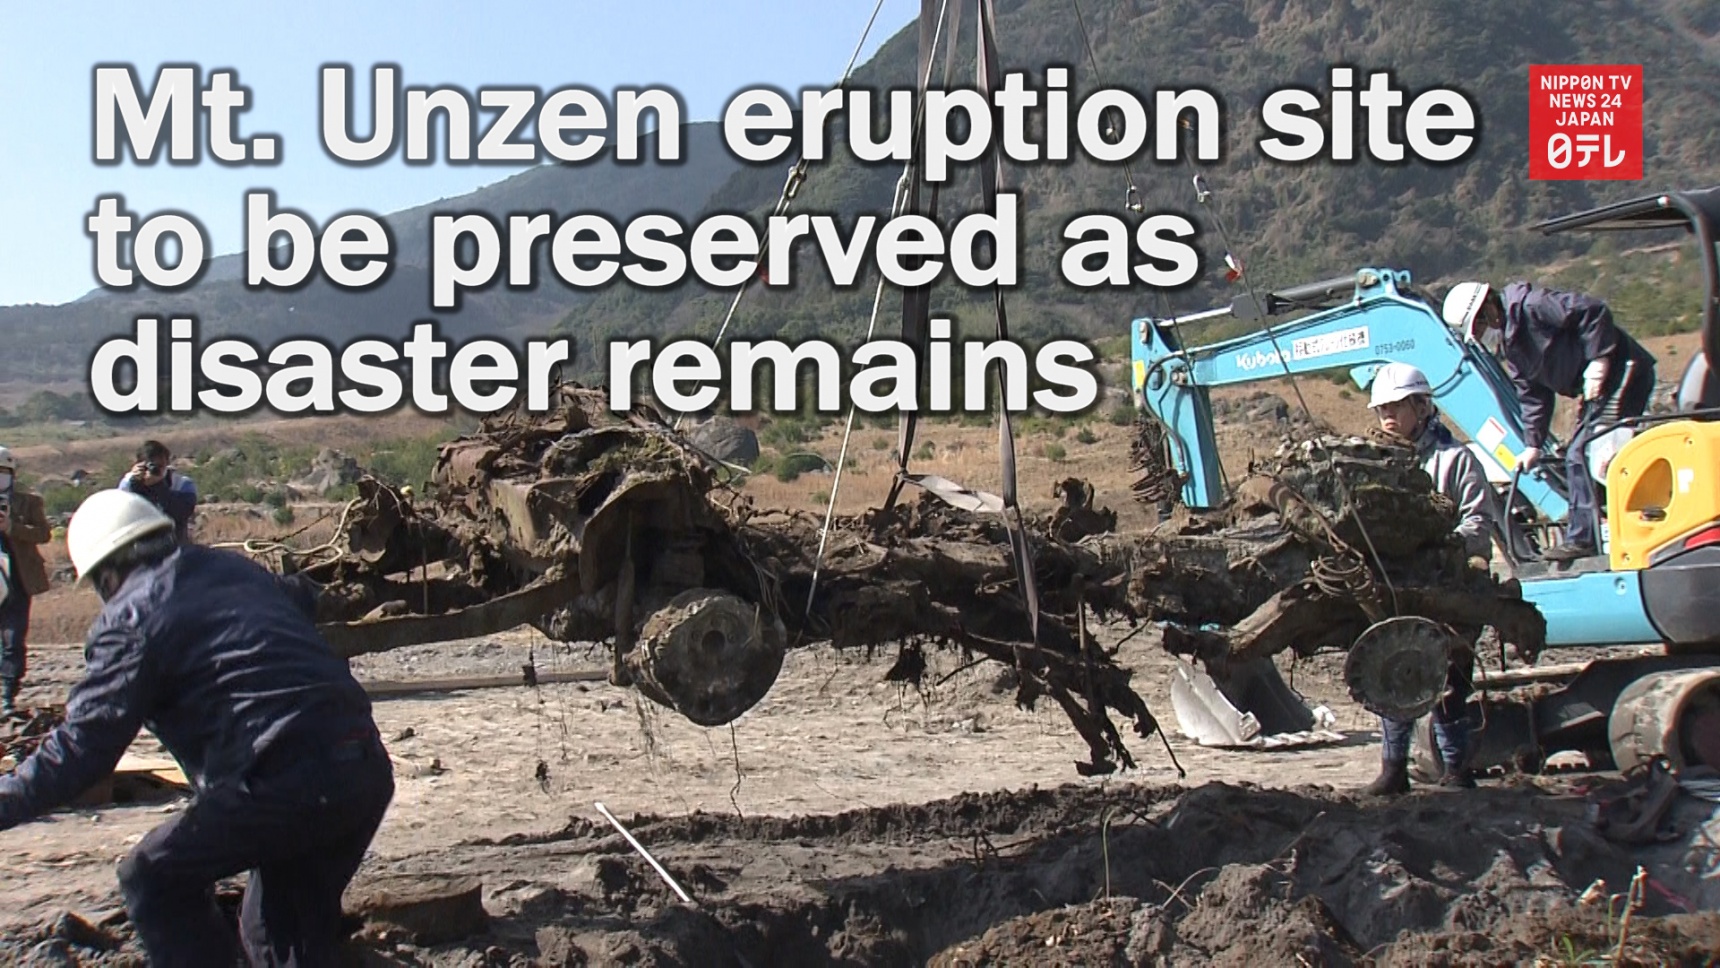 Mount Unzen Eruption Site to be Preserved